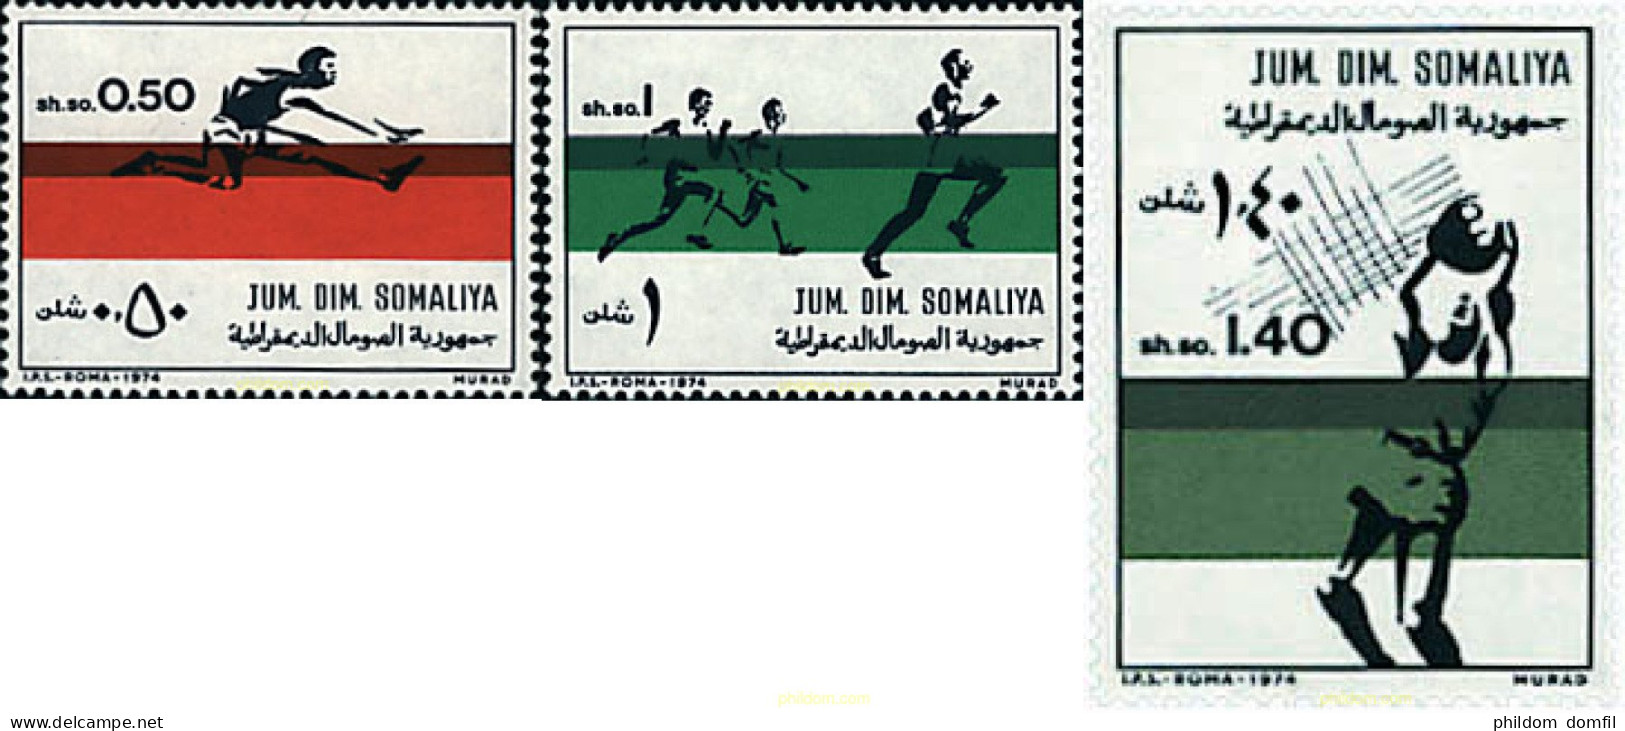 52699 MNH SOMALIA 1974 DEPORTES - Somalia (1960-...)